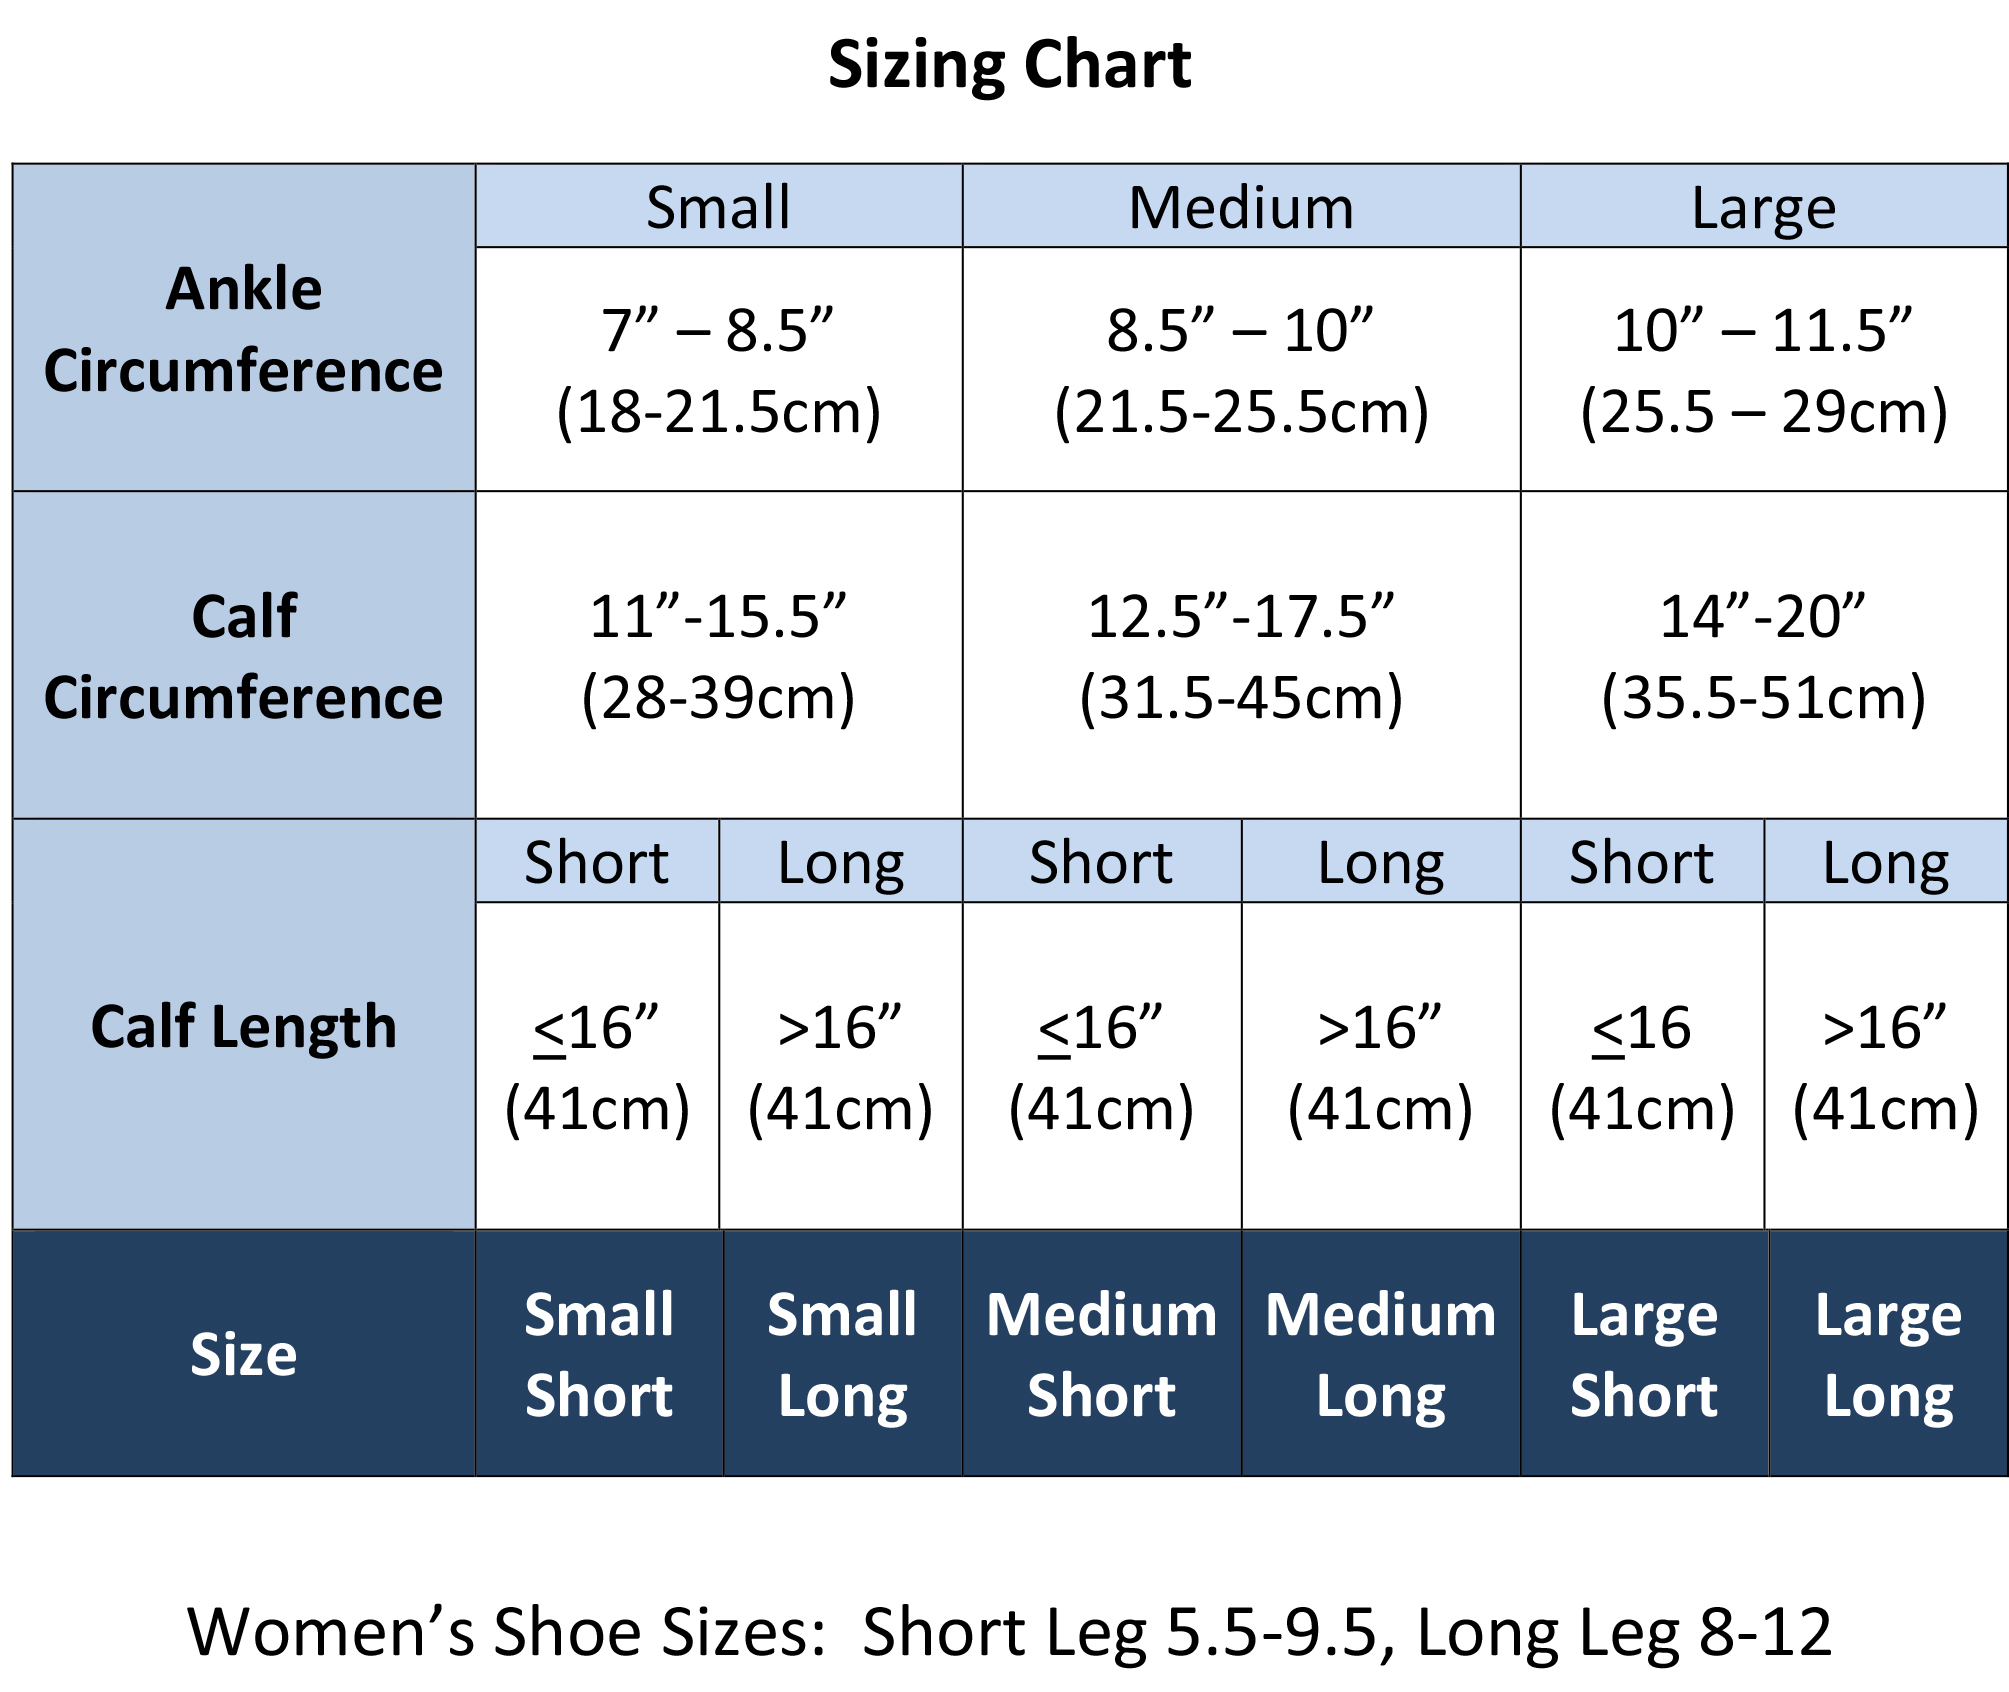 Compression Socks Sizing Chart